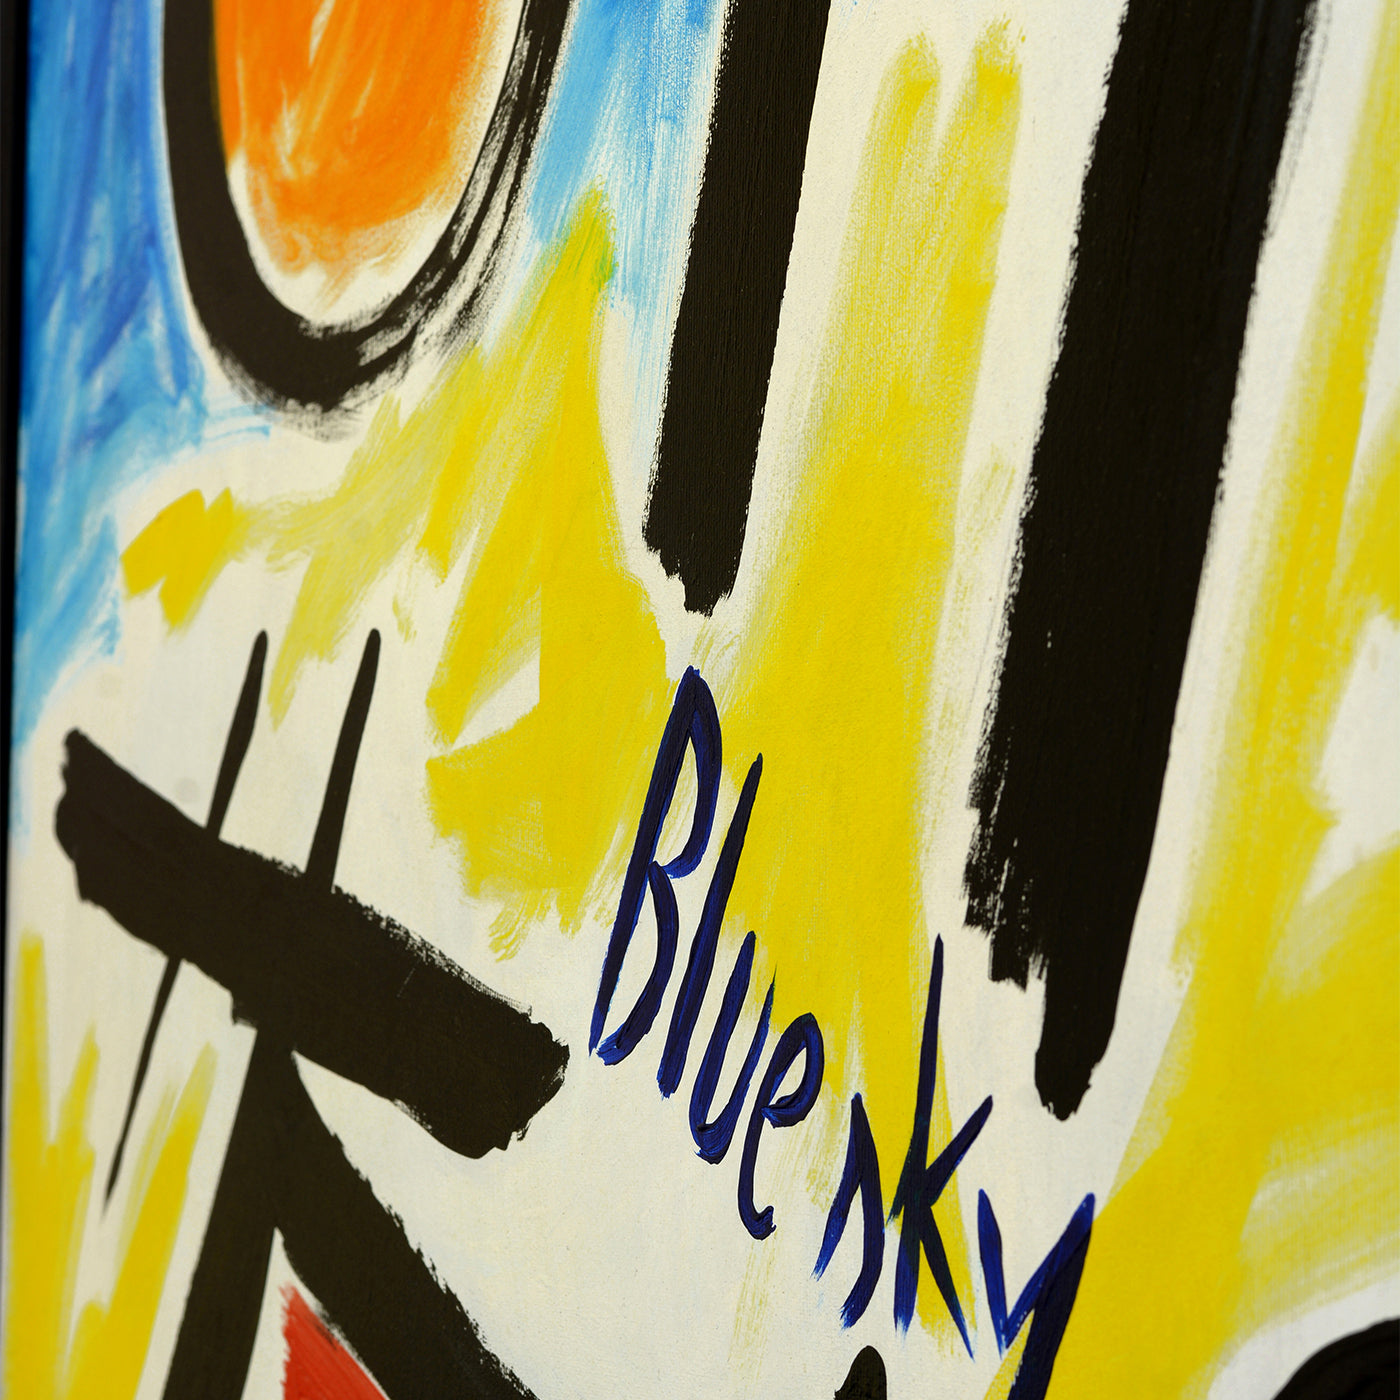 Bluesky Acrylic on Canvas Painting by Antonio Minopoli - Alternative view 1